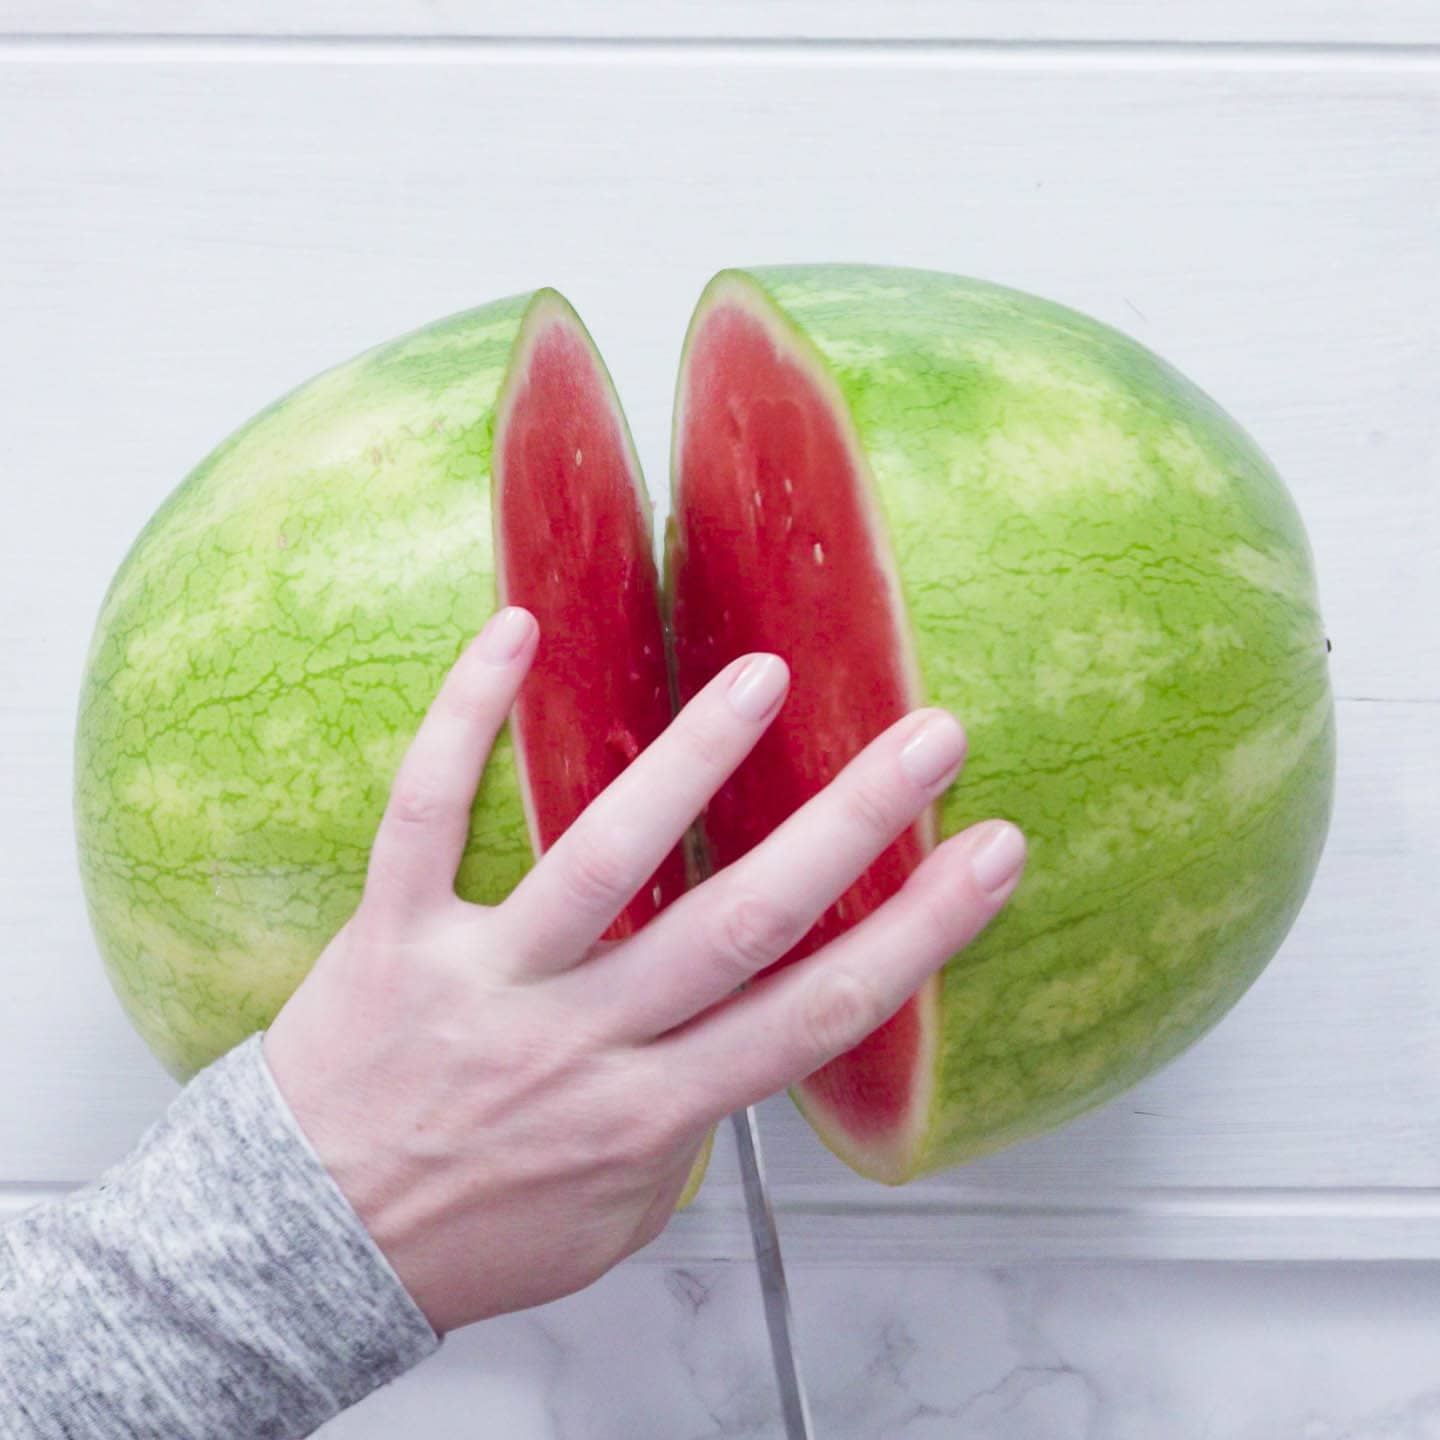 watermelon being cut in half